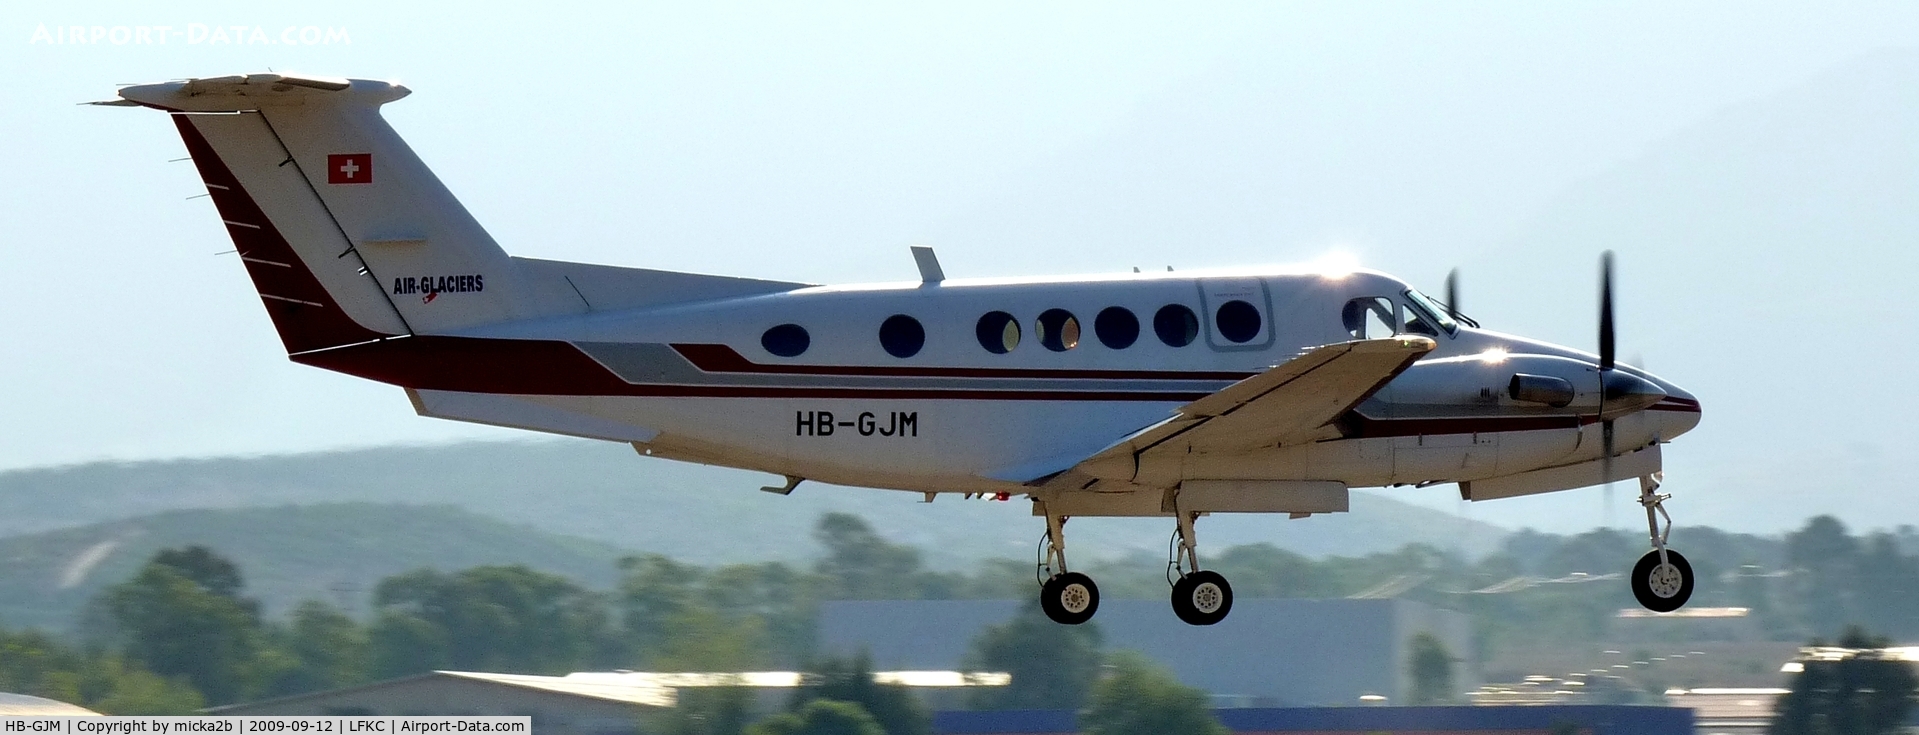 HB-GJM, 1977 Beech 200 Super King Air C/N BB-255, Landing in 18.